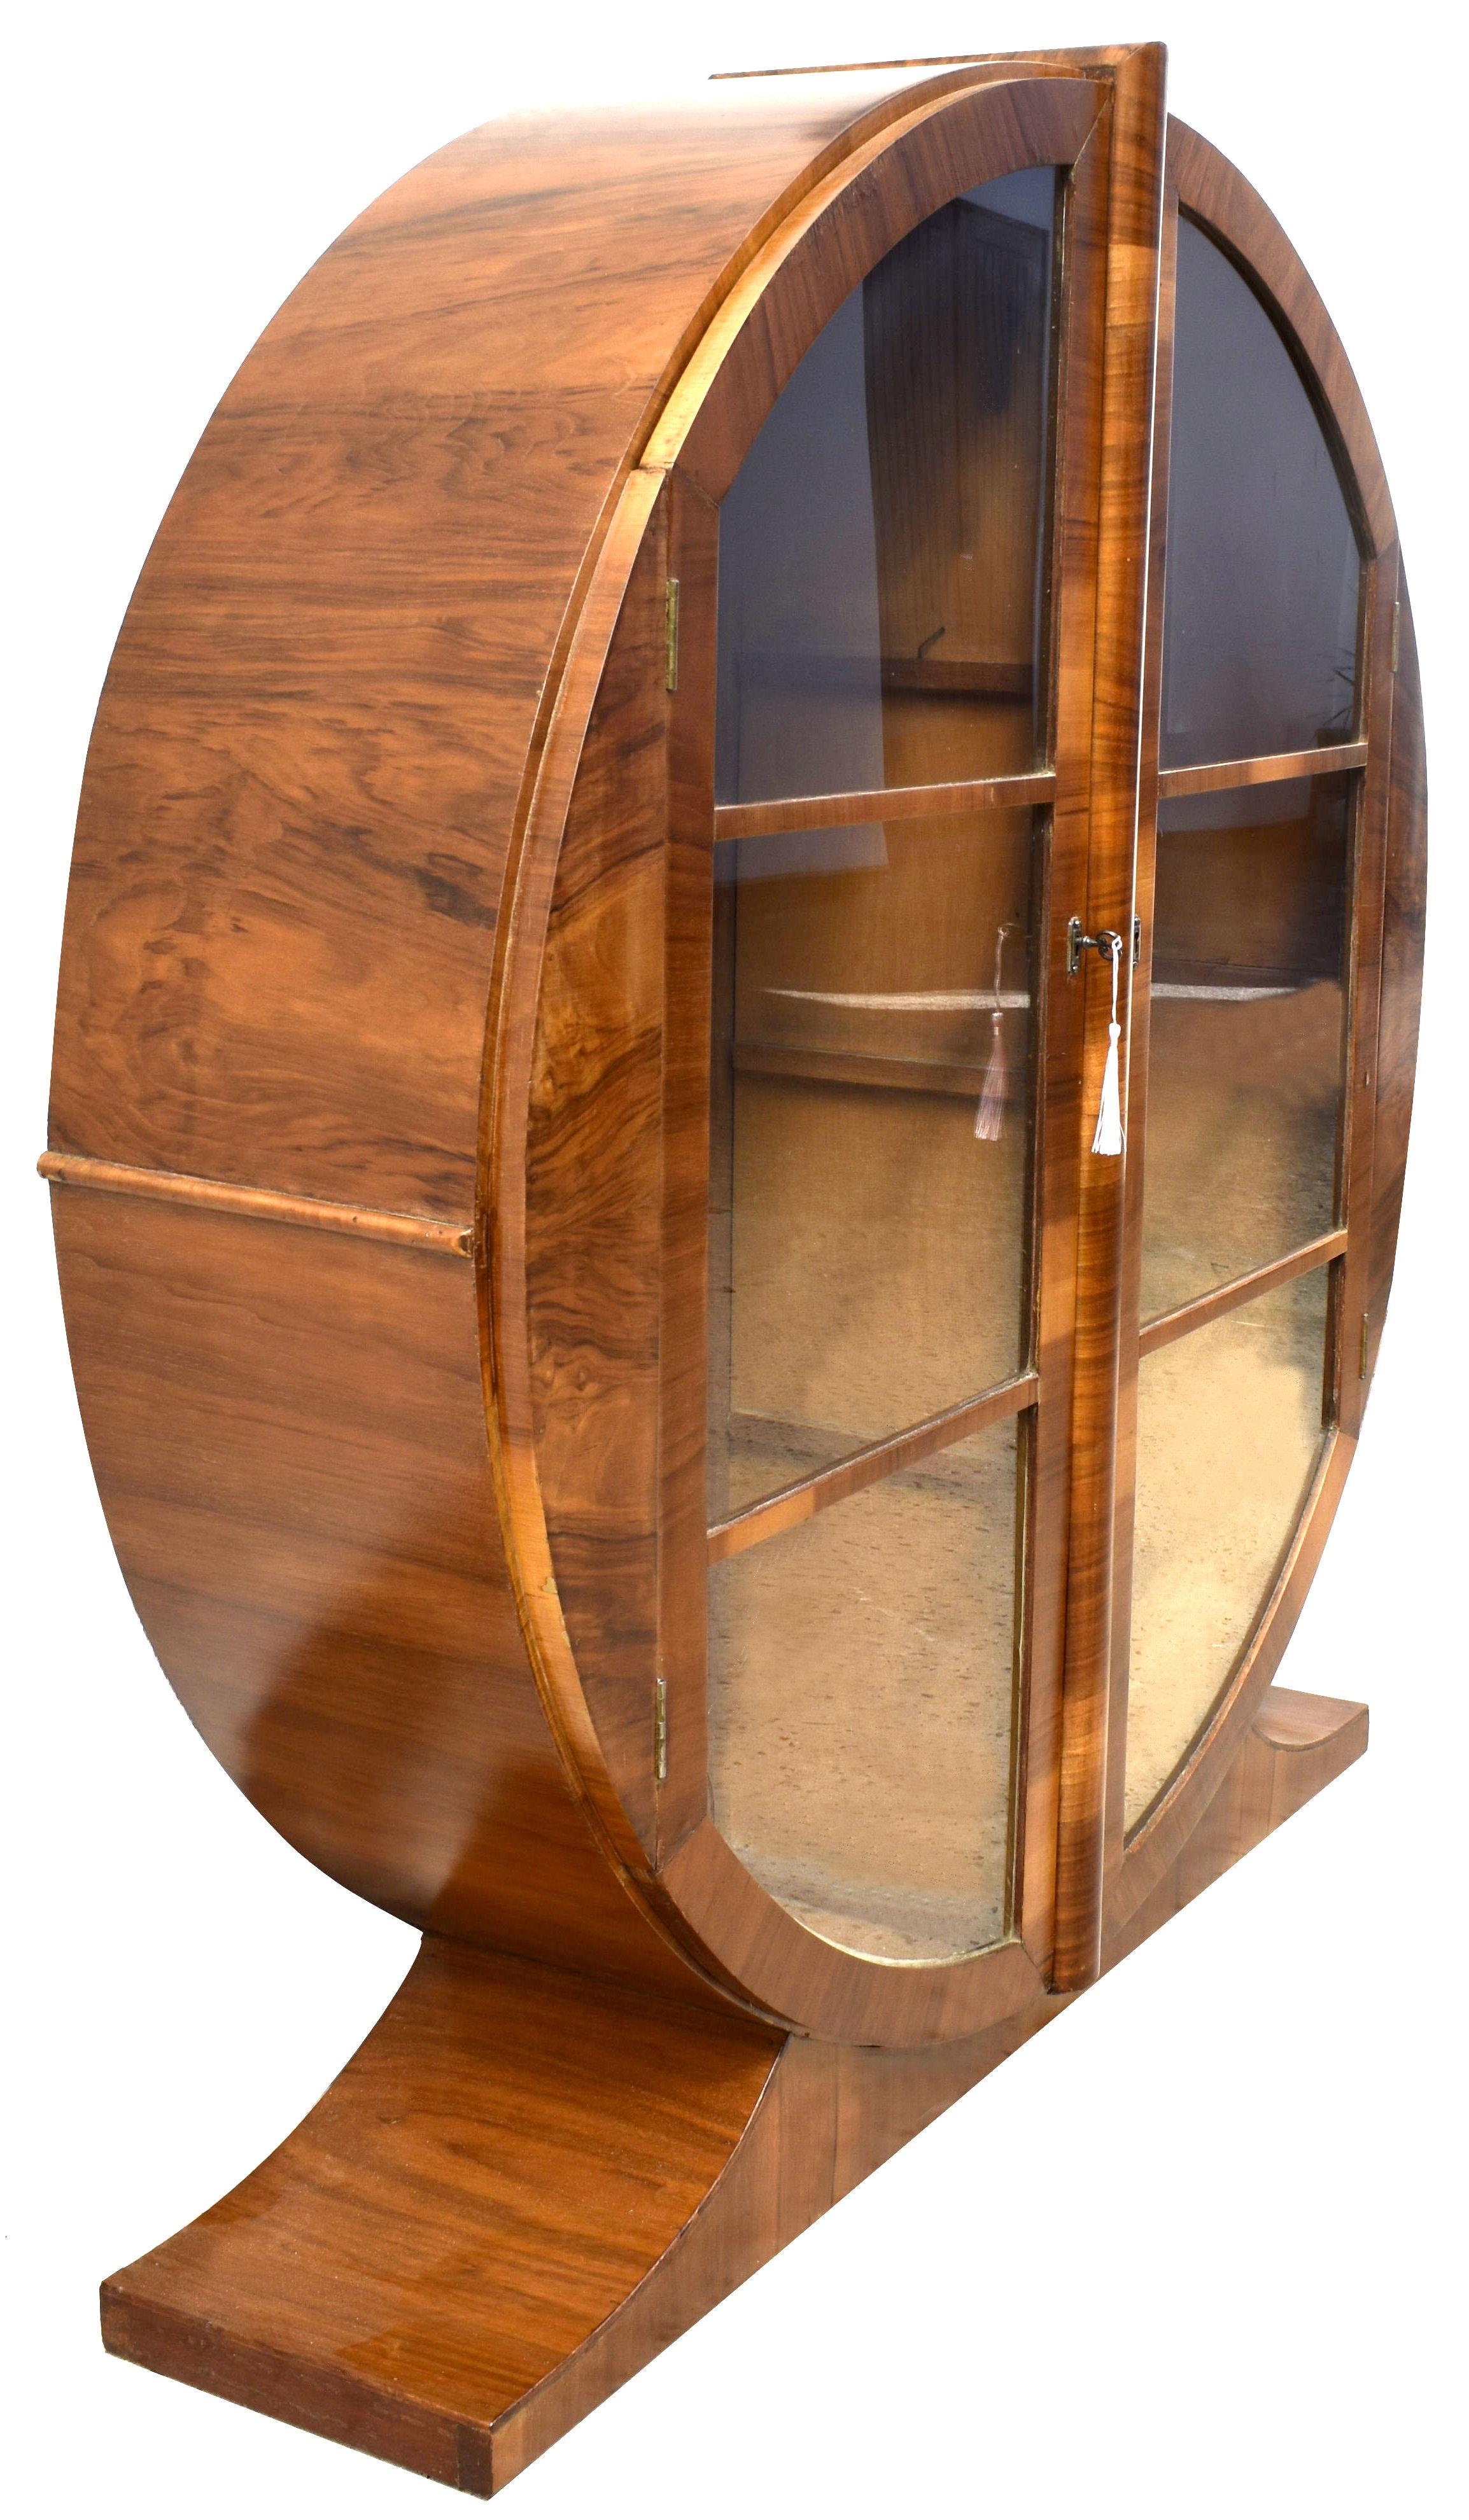 English Art Deco Spectacular Circular Display Cabinet Vitrine In Walnut, c1930s For Sale